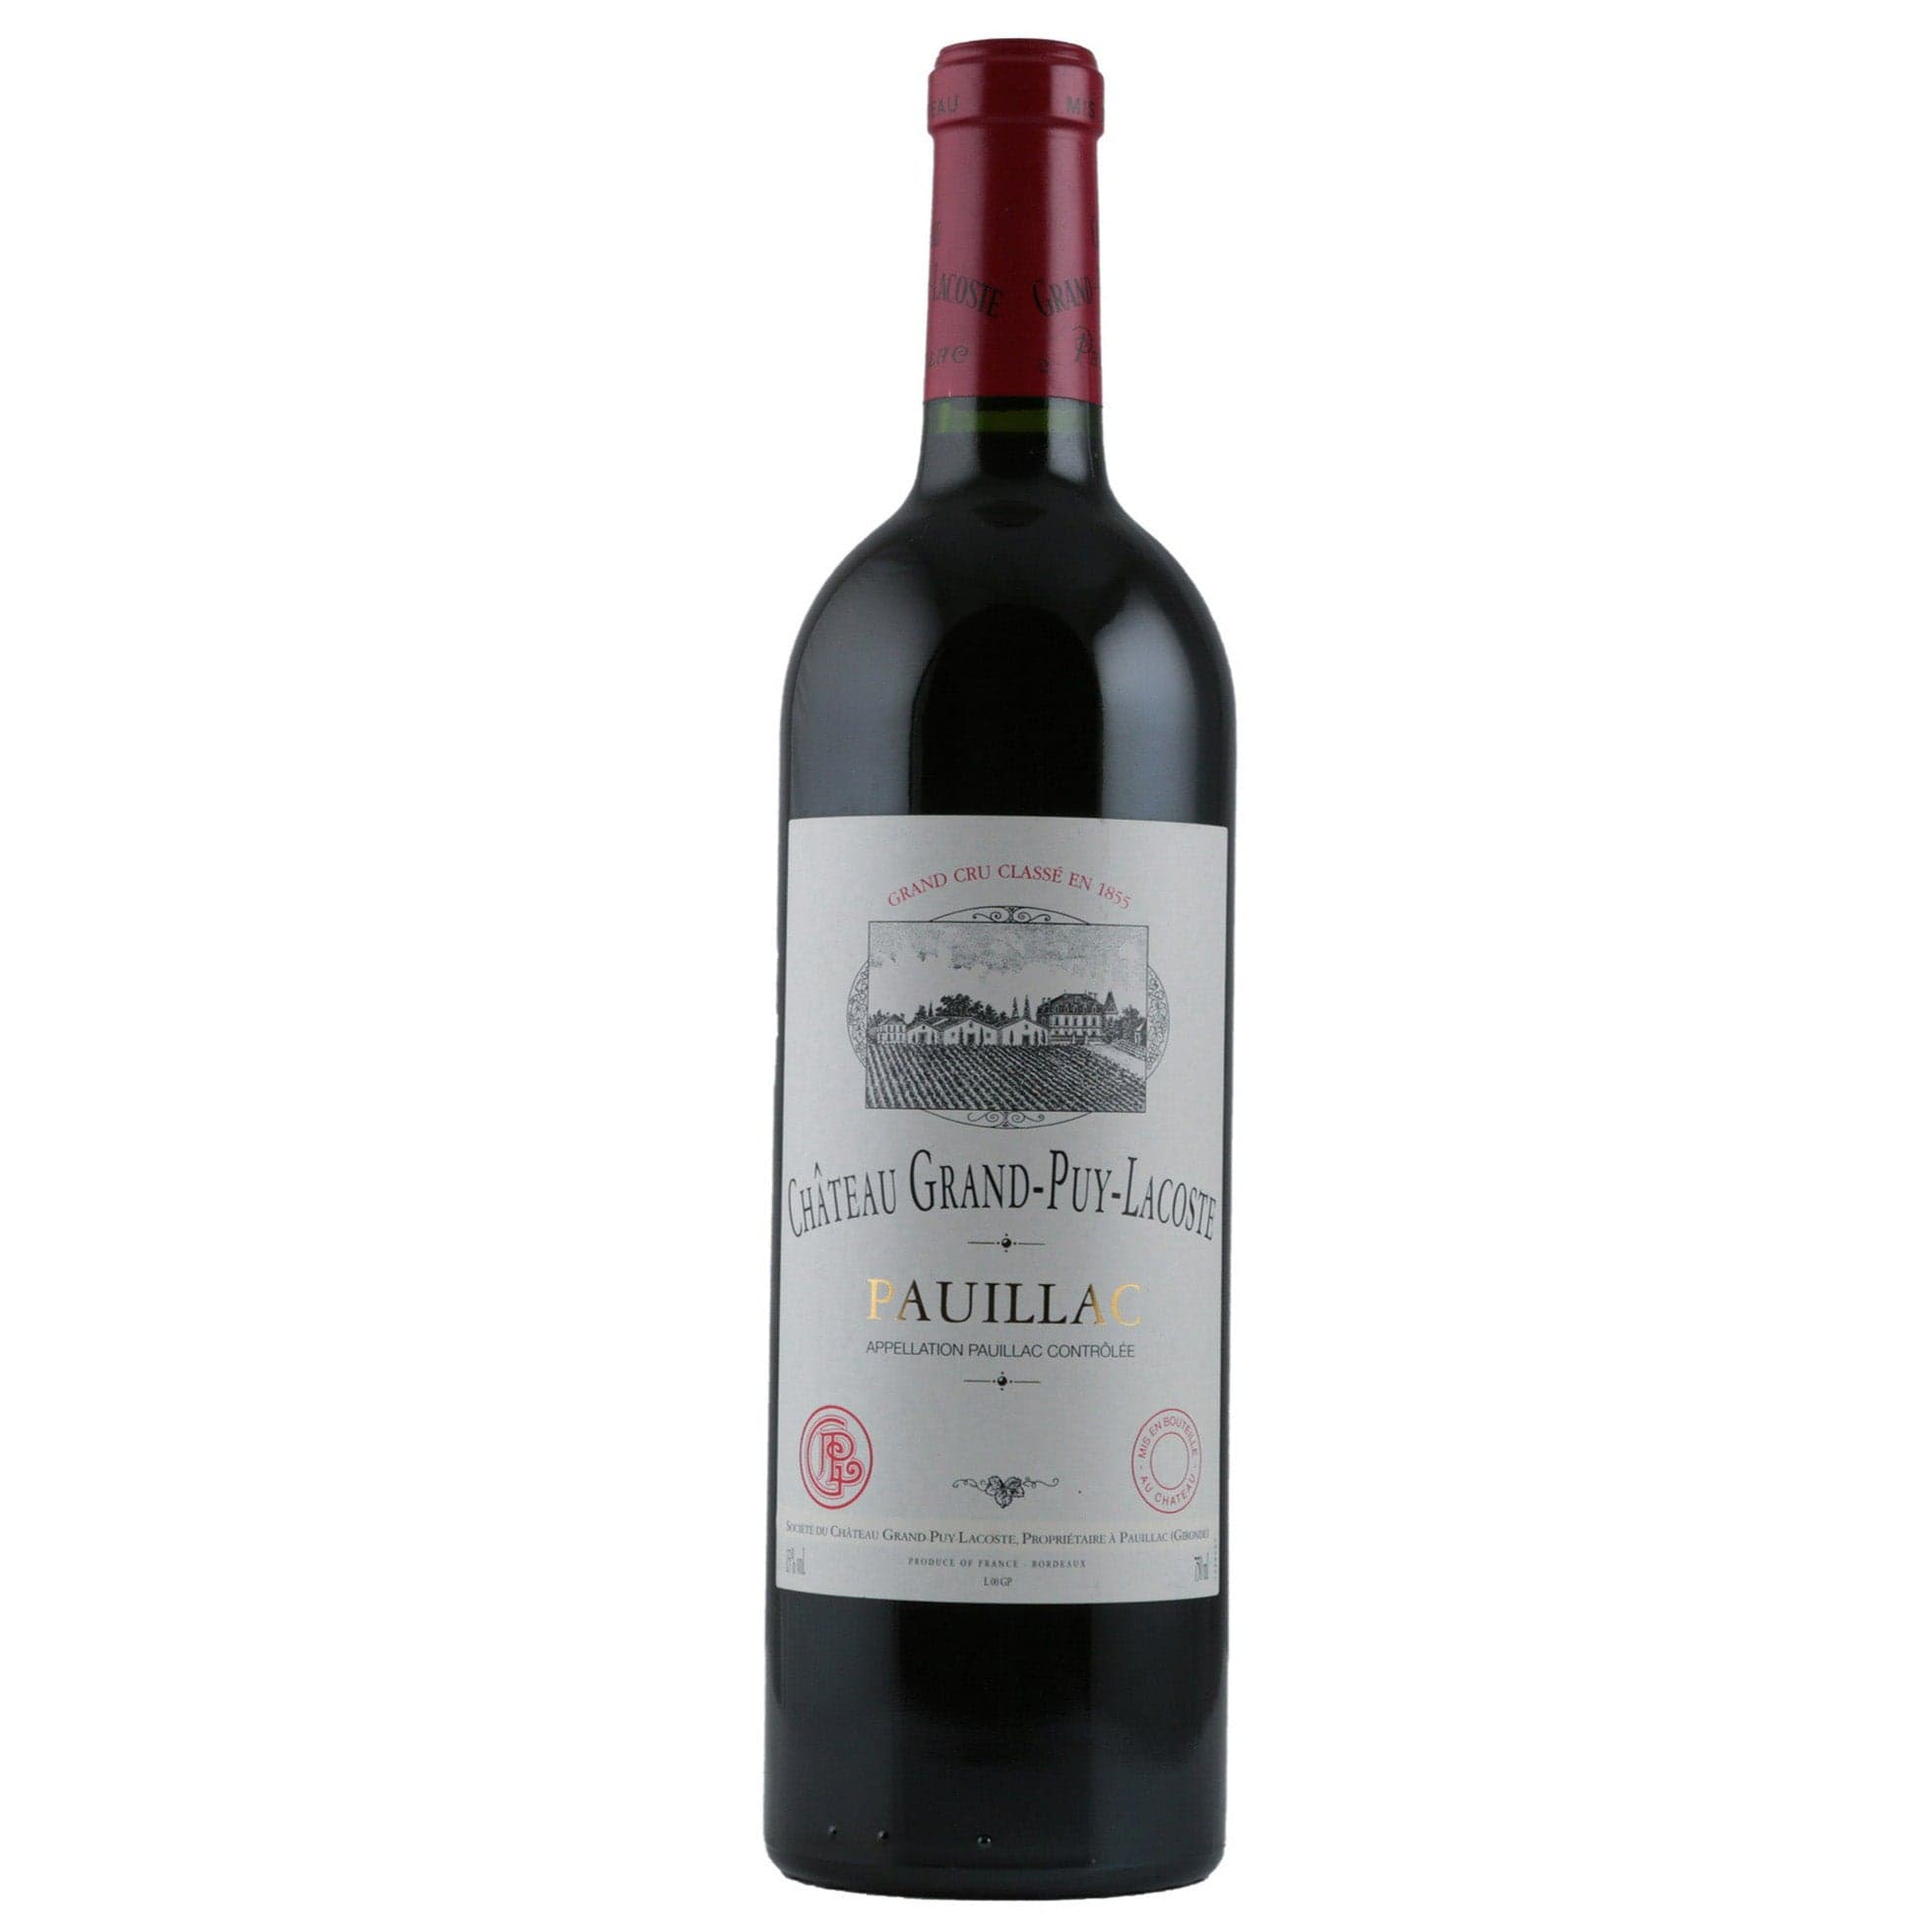 Single bottle of Red wine Ch. Grand-Puy-Lacoste, 5th Growth Grand Cru Classe, Pauillac, 2005 78% Cabernet Sauvignon & 22% Merlot